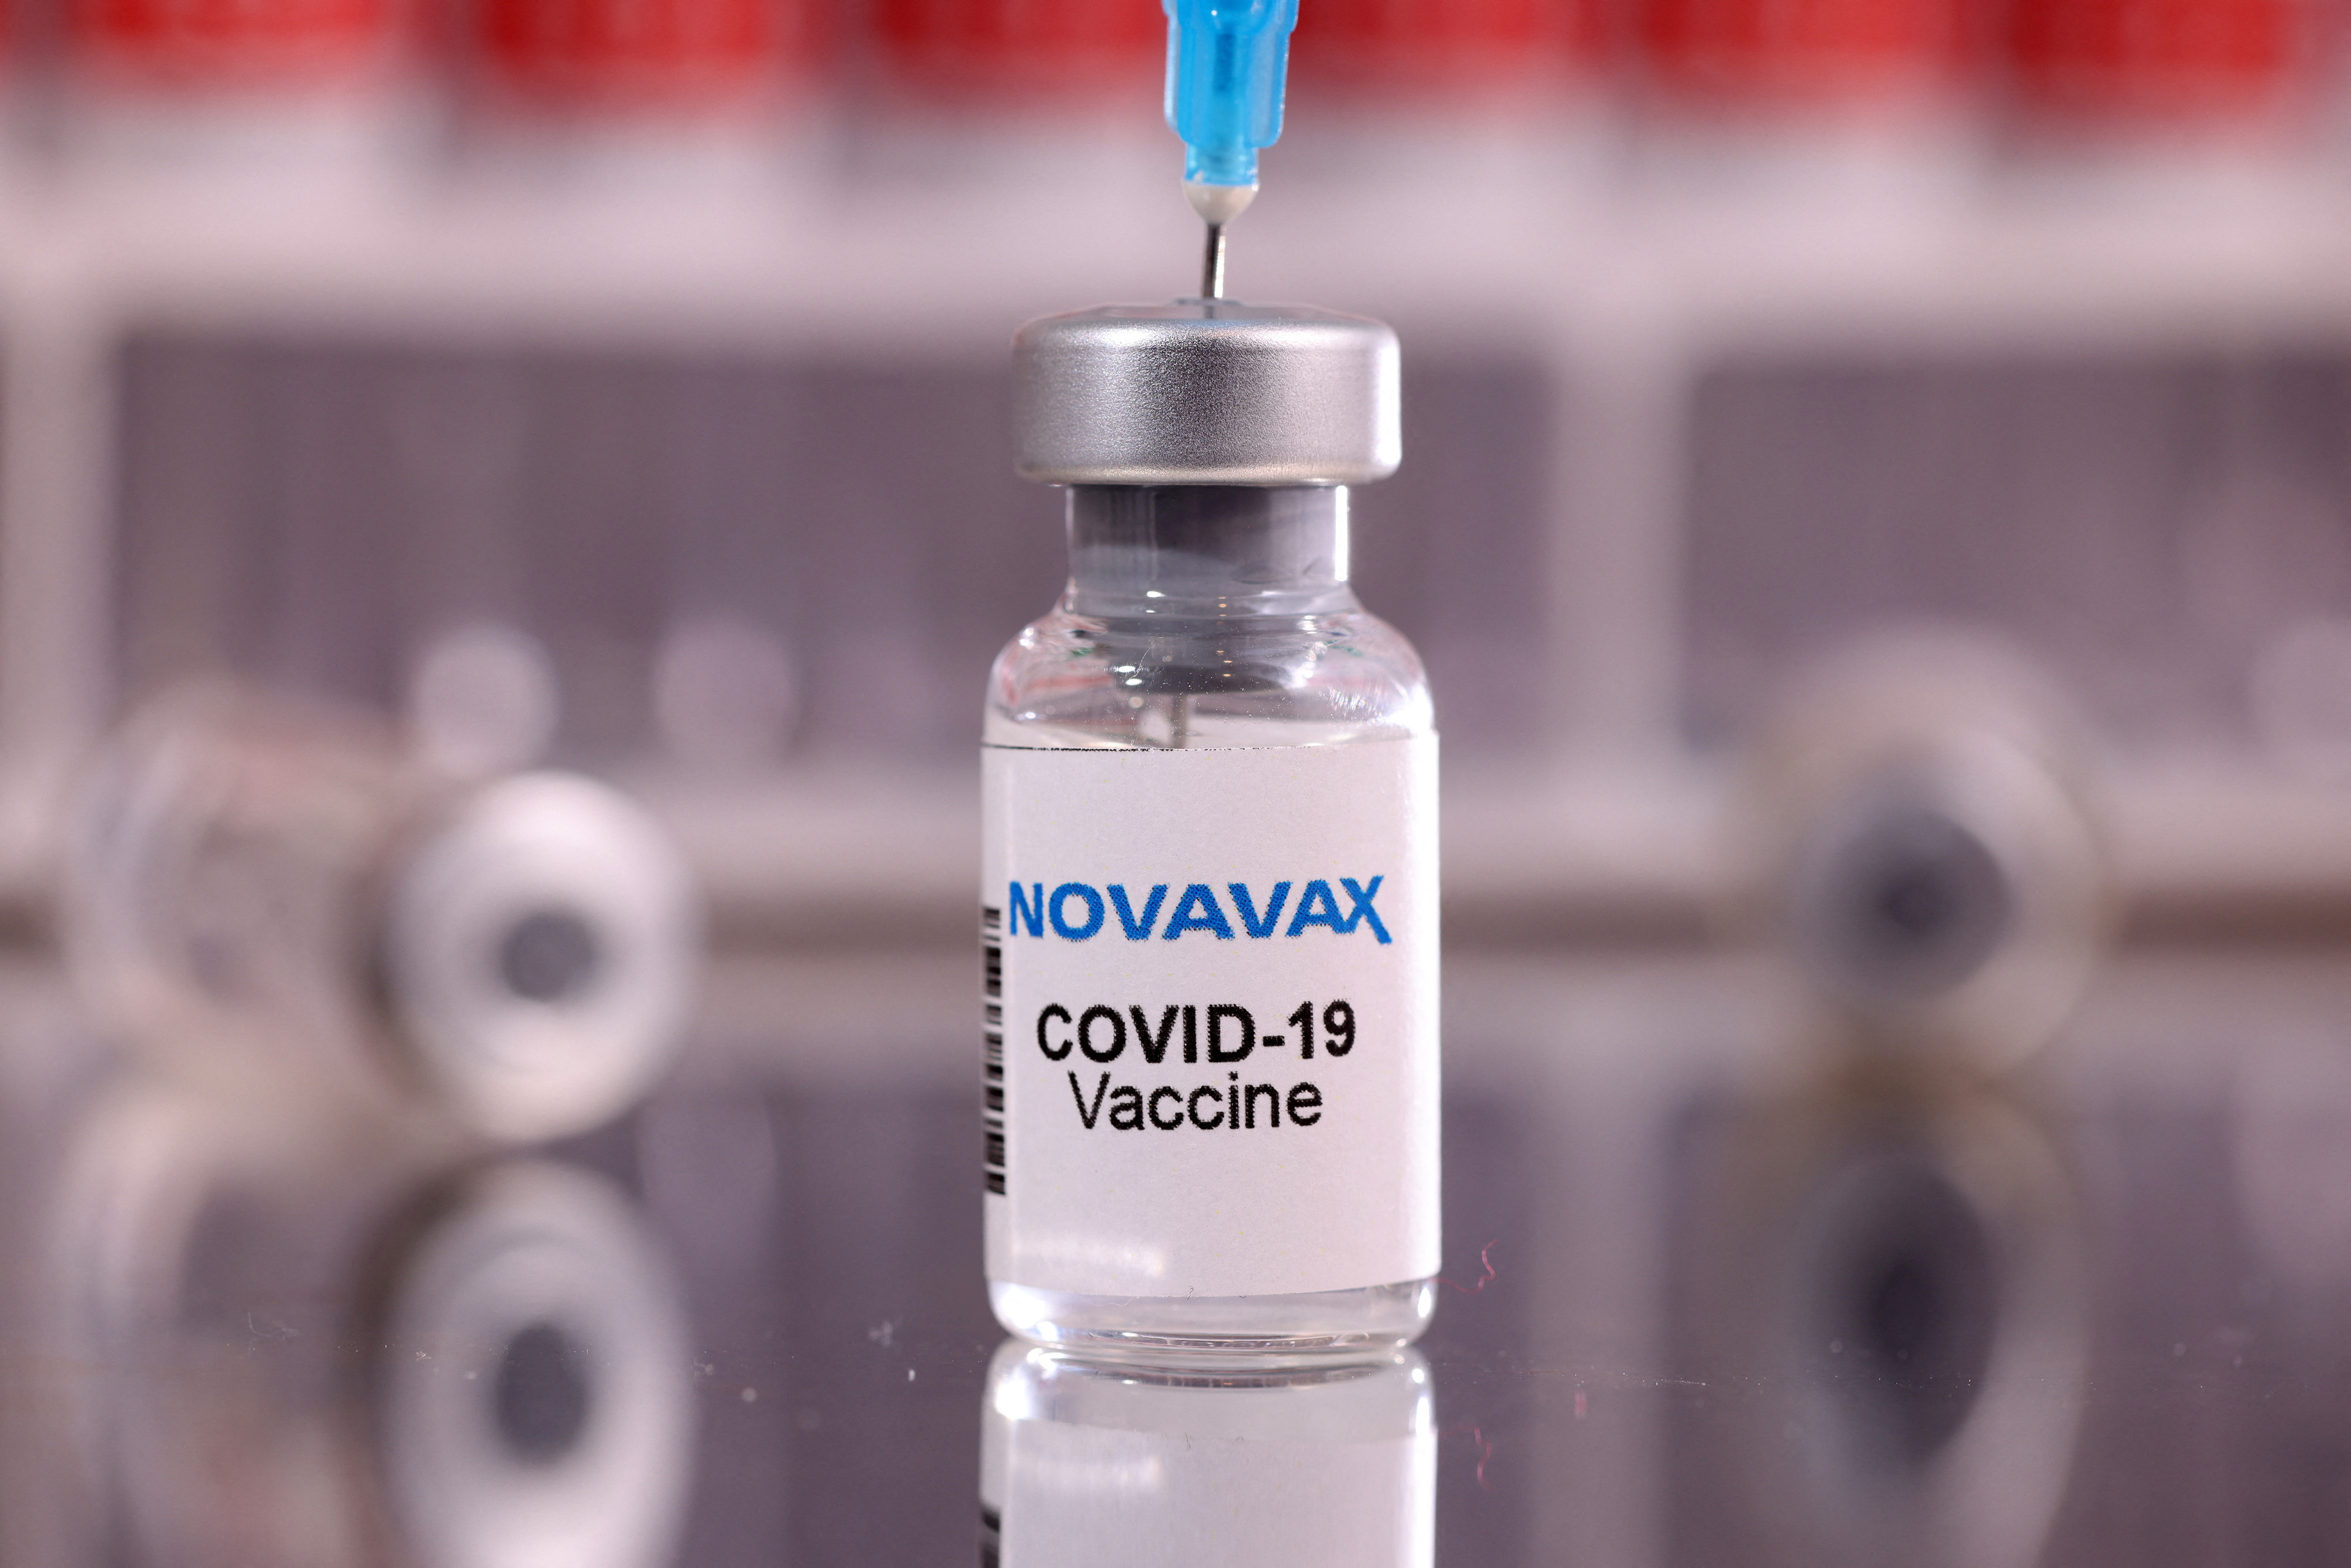 Breaking News Illustration of COVID-19 vaccine vial